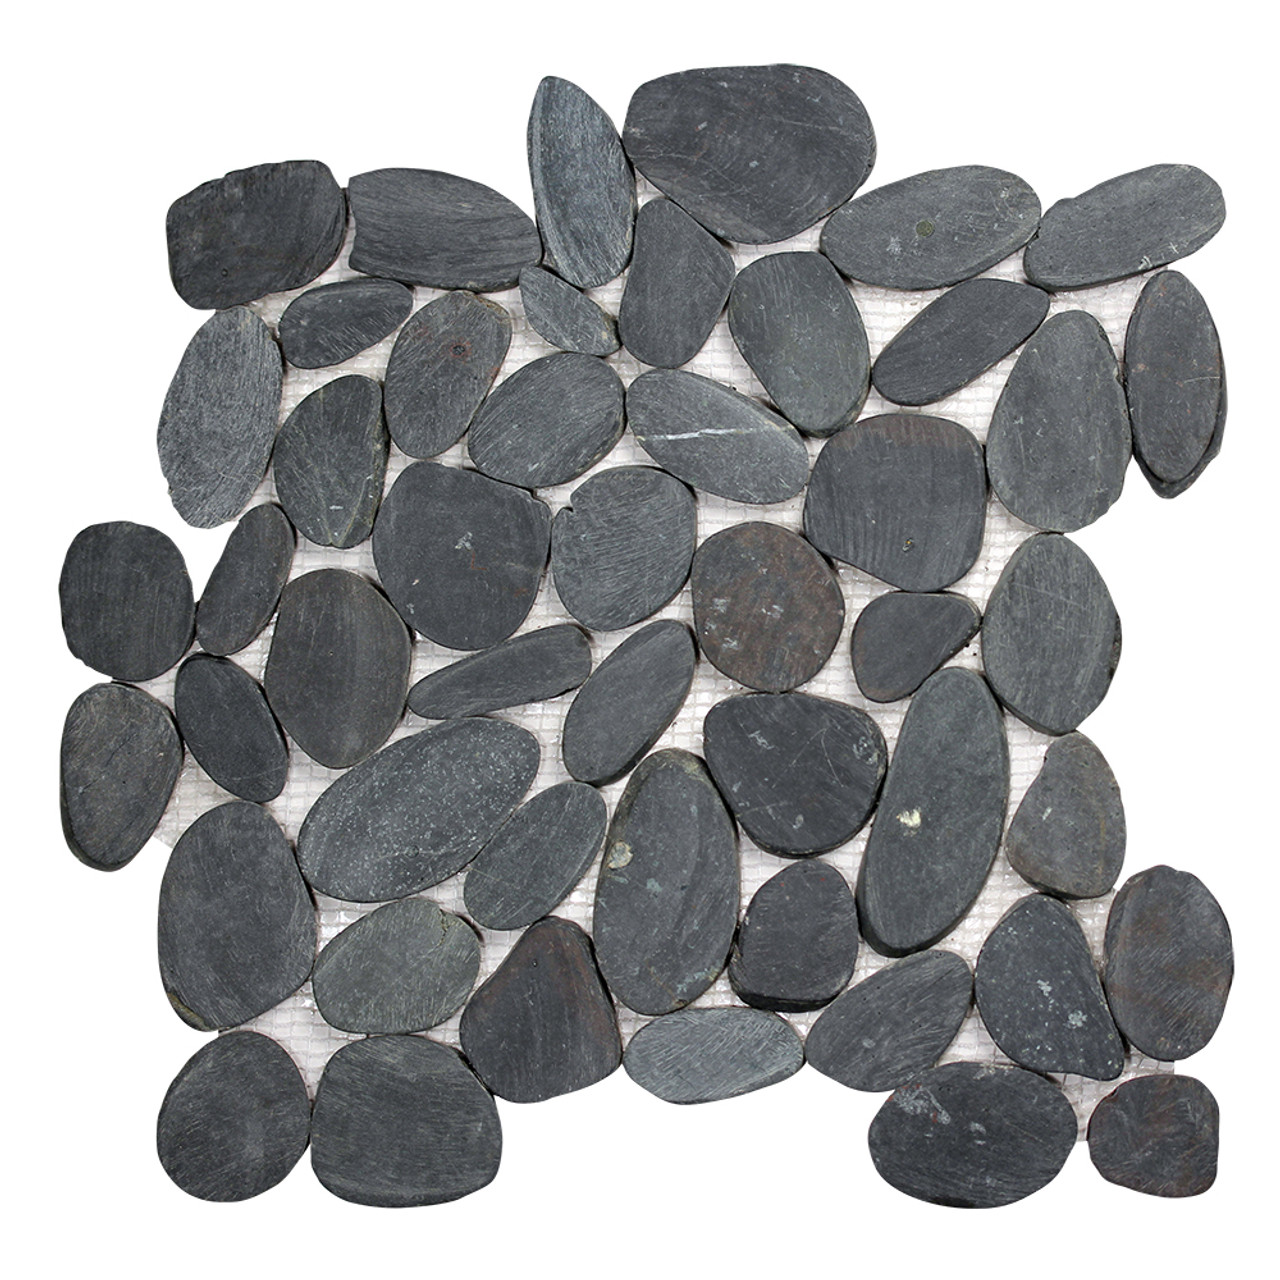 Pebble Stone Sliced Black Tile